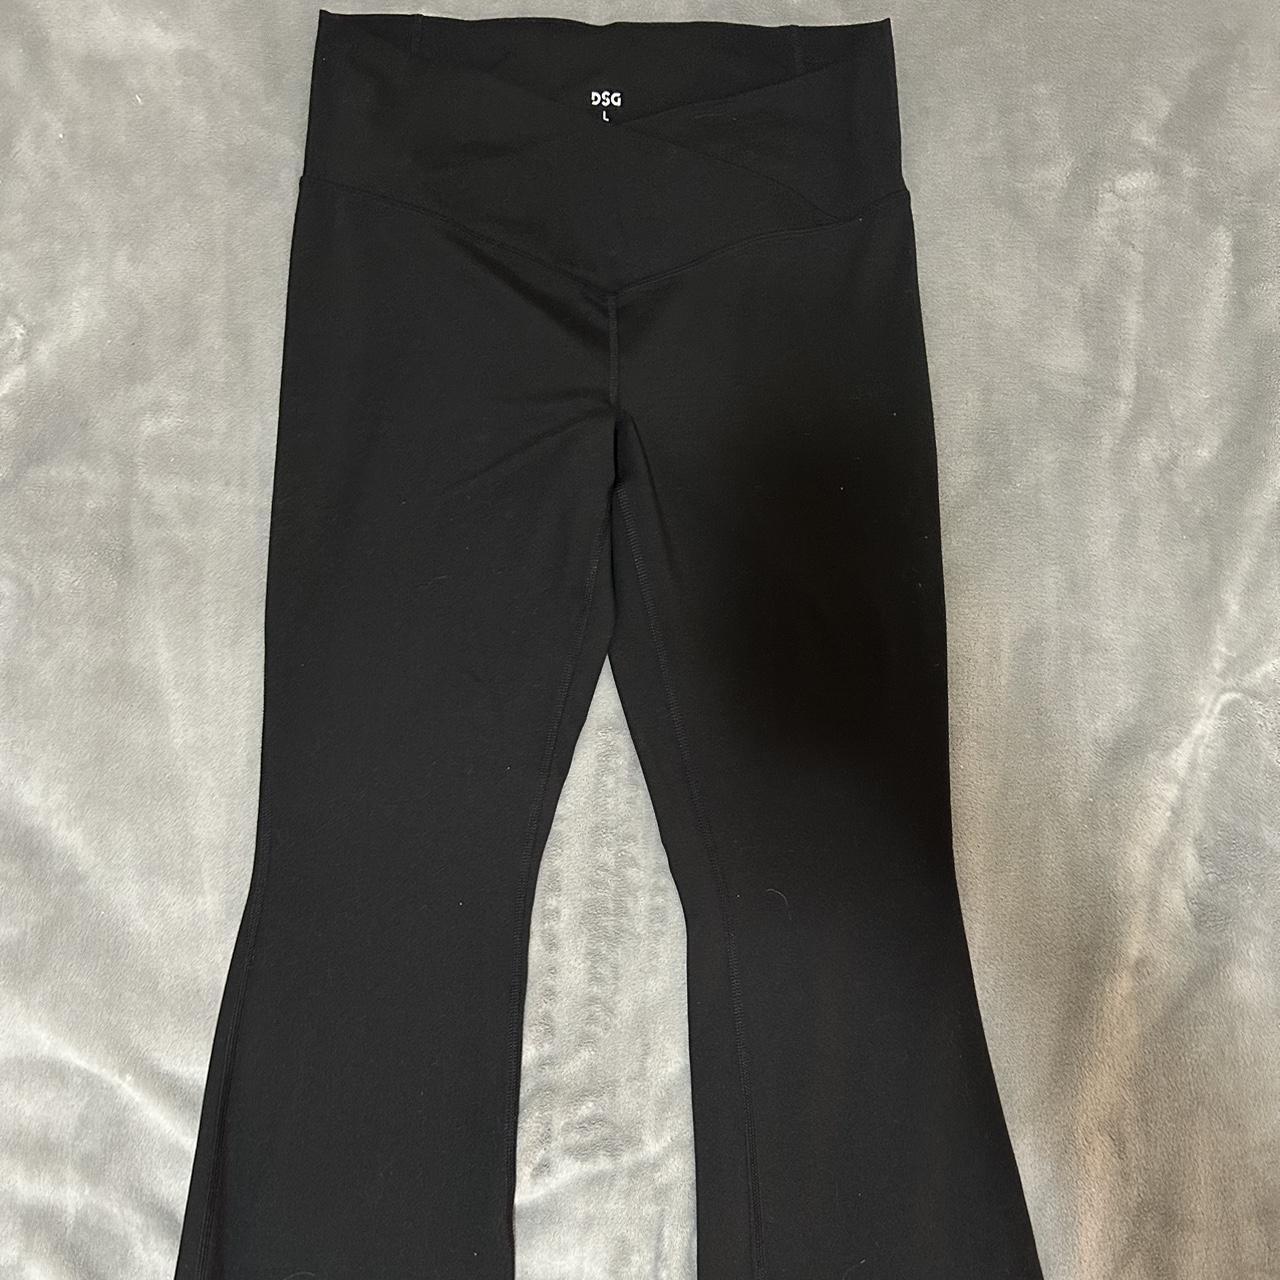 dsg black flare leggings -never worn -size L - Depop